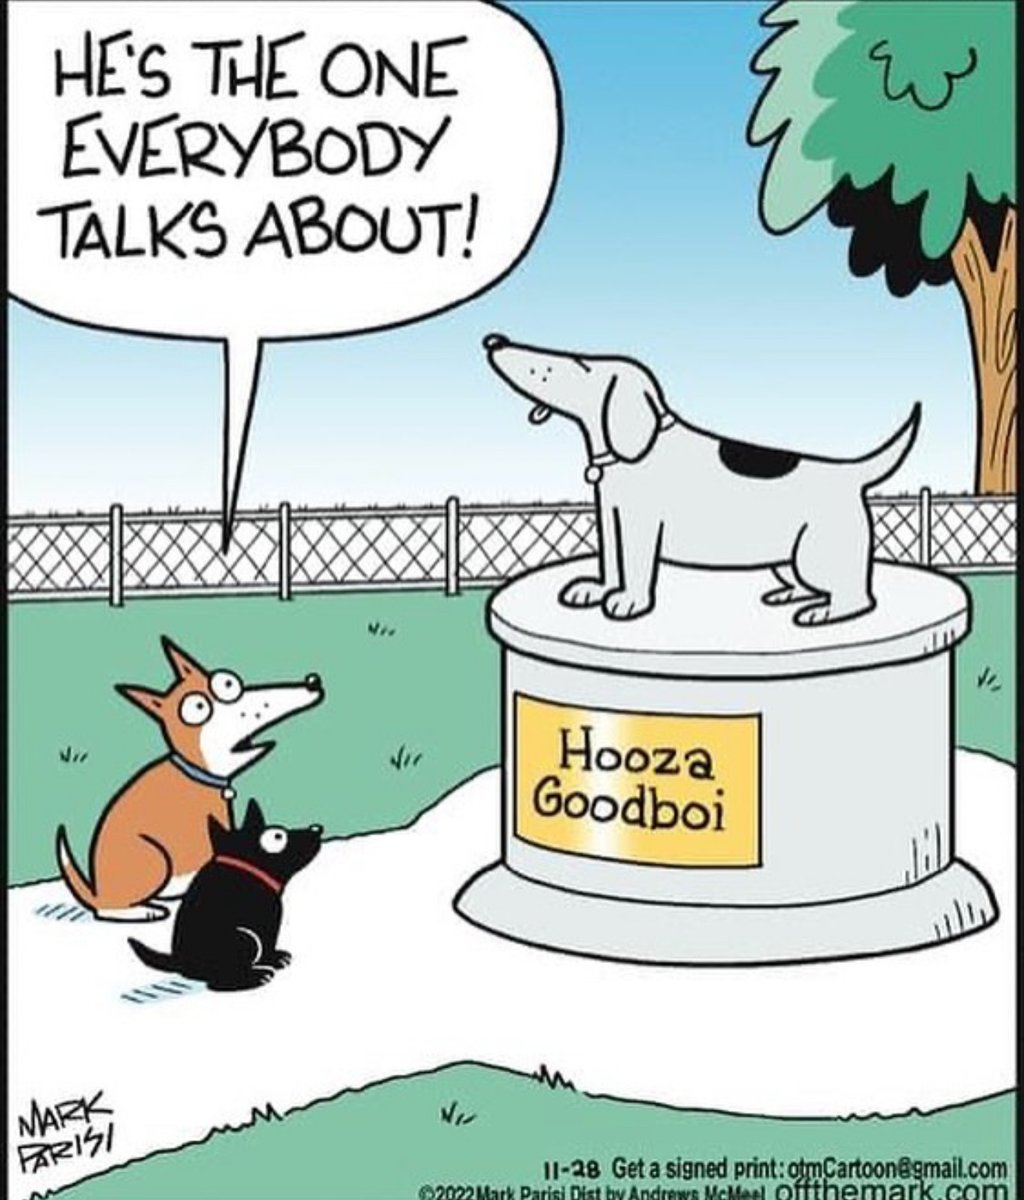 Raise  your  paw  if  your  pup  is  a  “GOODBOI”🐶  

Comic  Credit:  @mark_parisi_otm

#doghumor #dogcomic #dogmeme #dogmomsclub #dogtreats #dogtreatsfordays #funnymemesdaily #funnycomic #dogfunny #dogtv #dogcomicstrips